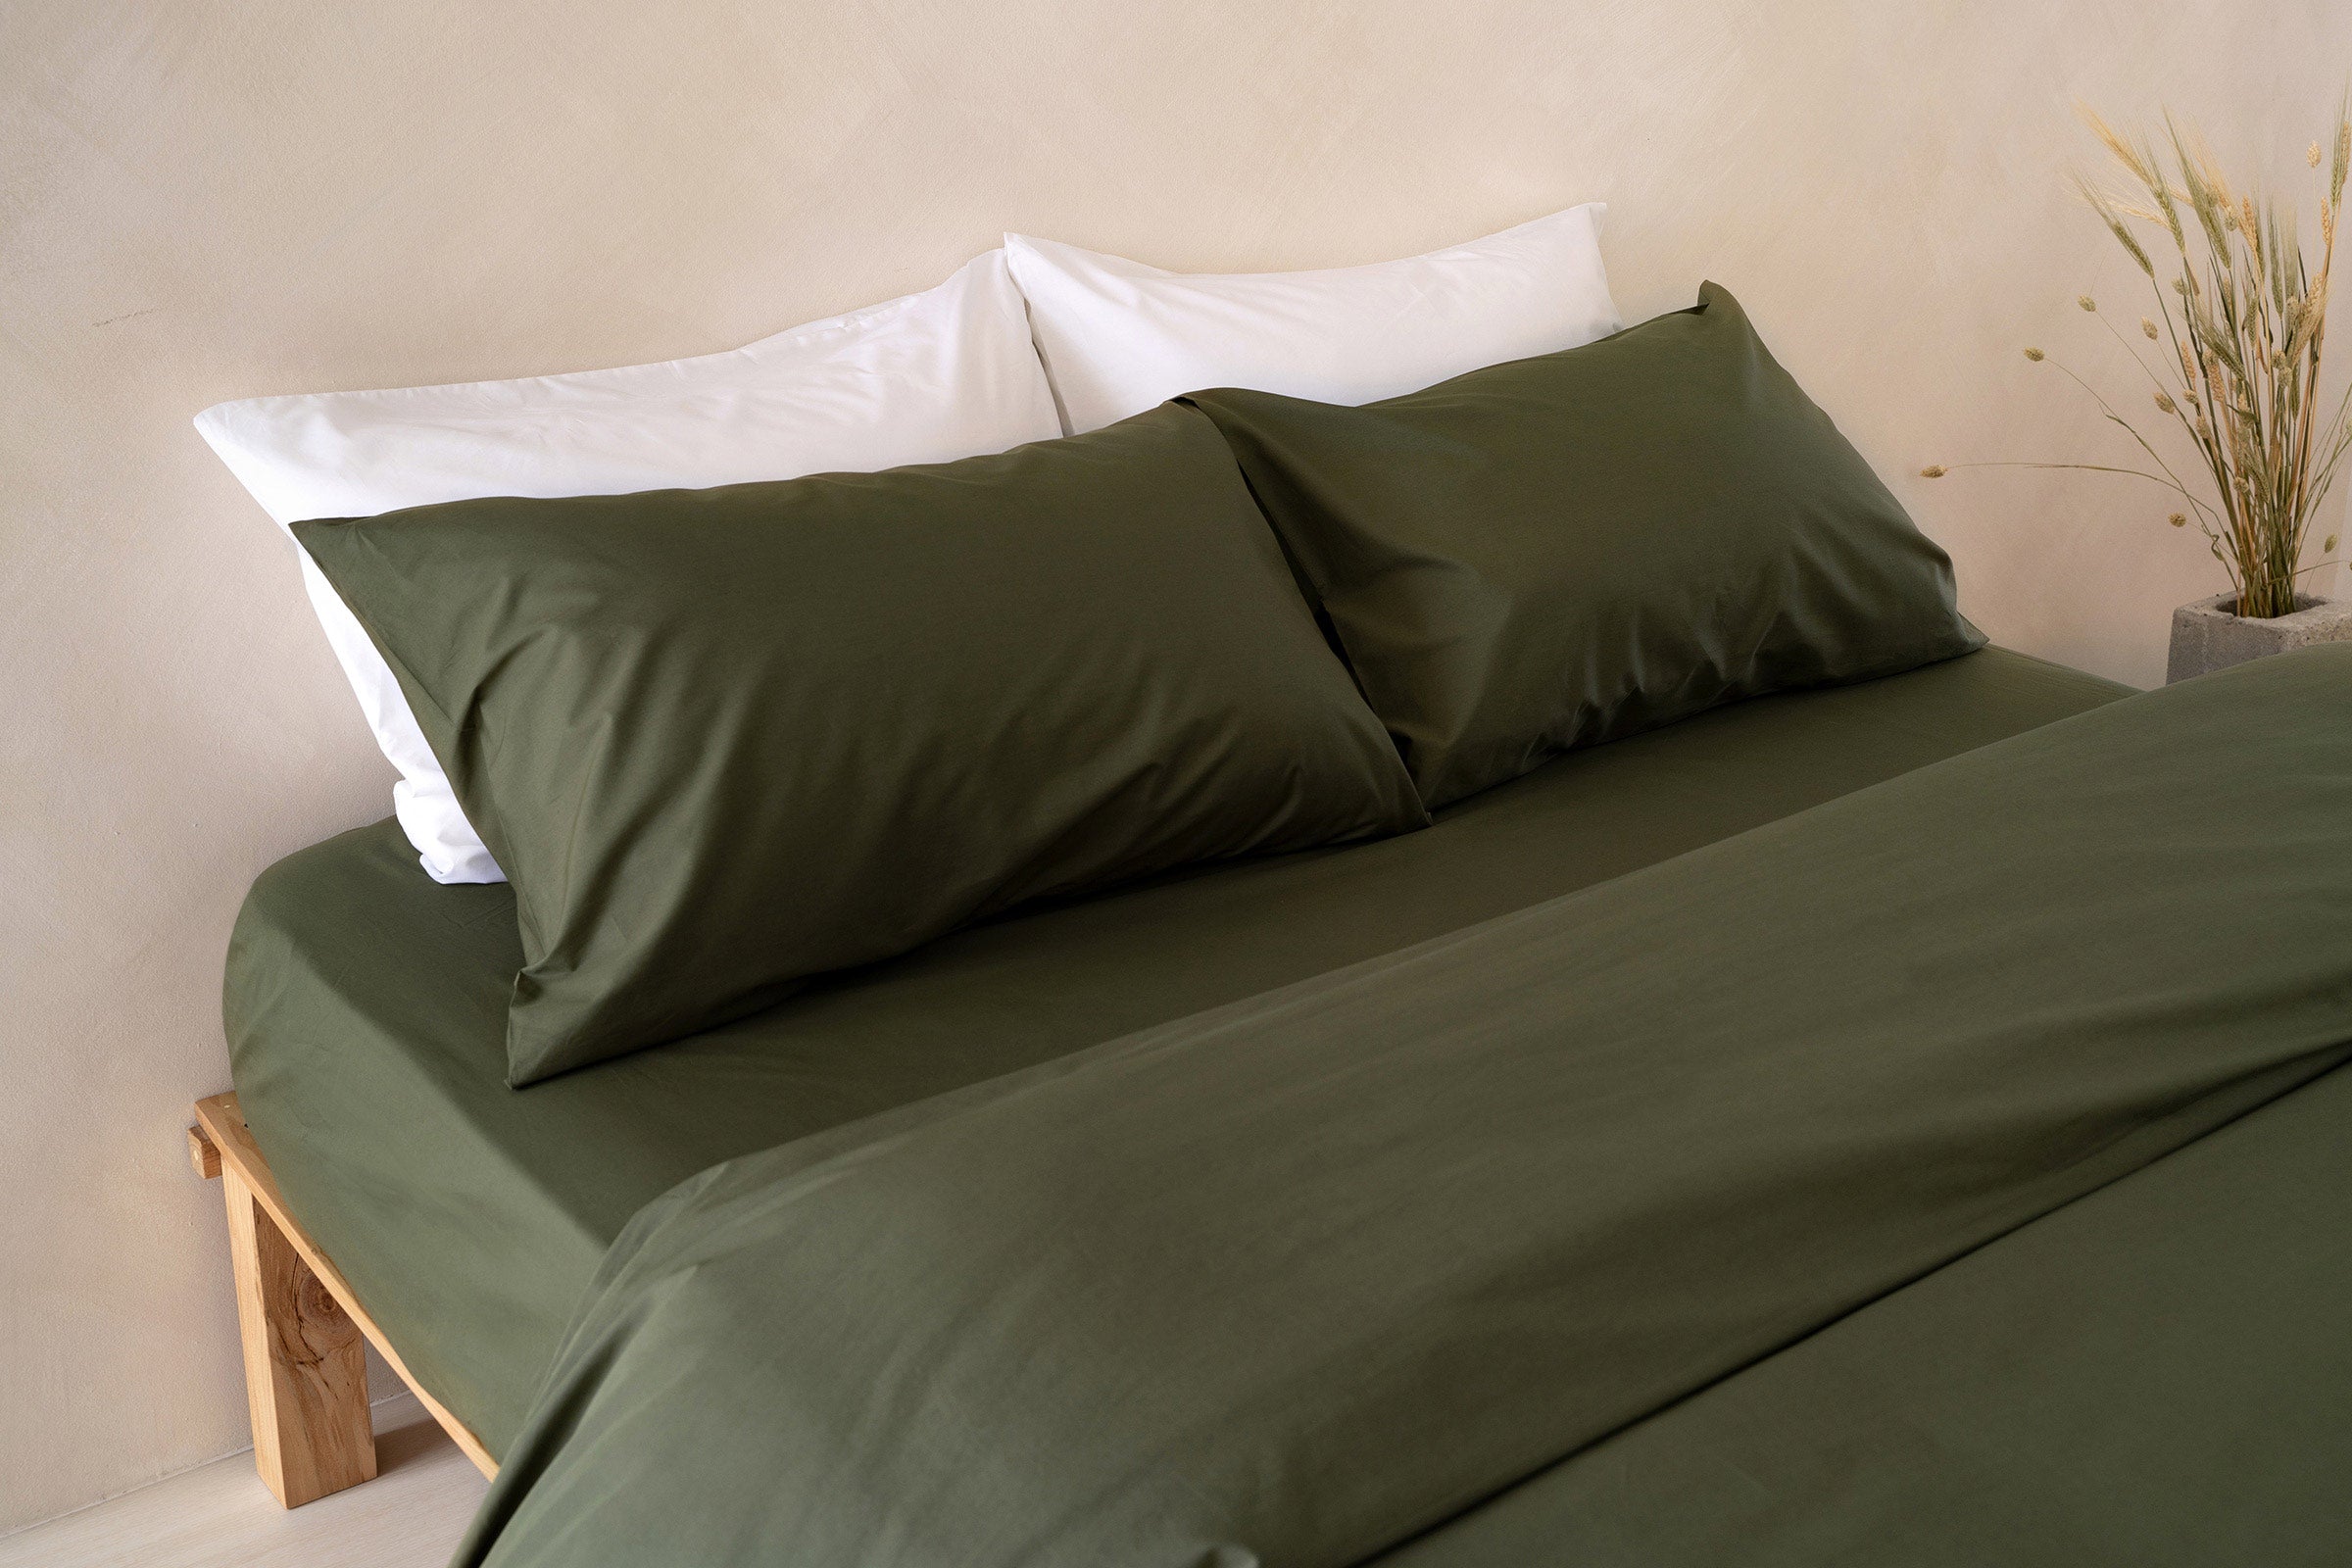 crisp-olive-duvet-cover-fitted-sheet-pillowcase-pair-white-pillowcase-pair-side-view-by-sojao.jpg